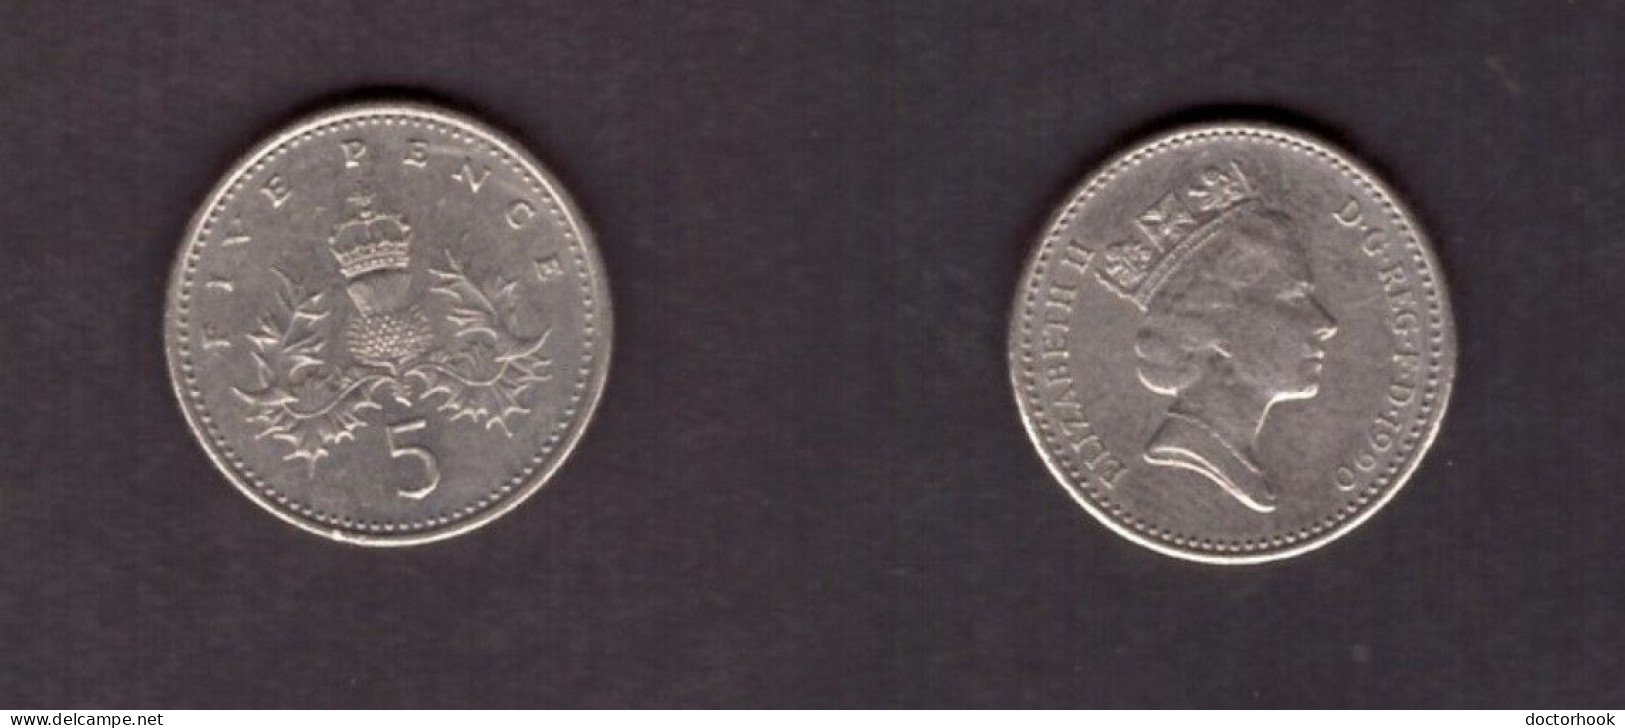 GREAT BRITAIN   5 PENCE 1990 (KM # 937b) #7288 - 5 Pence & 5 New Pence